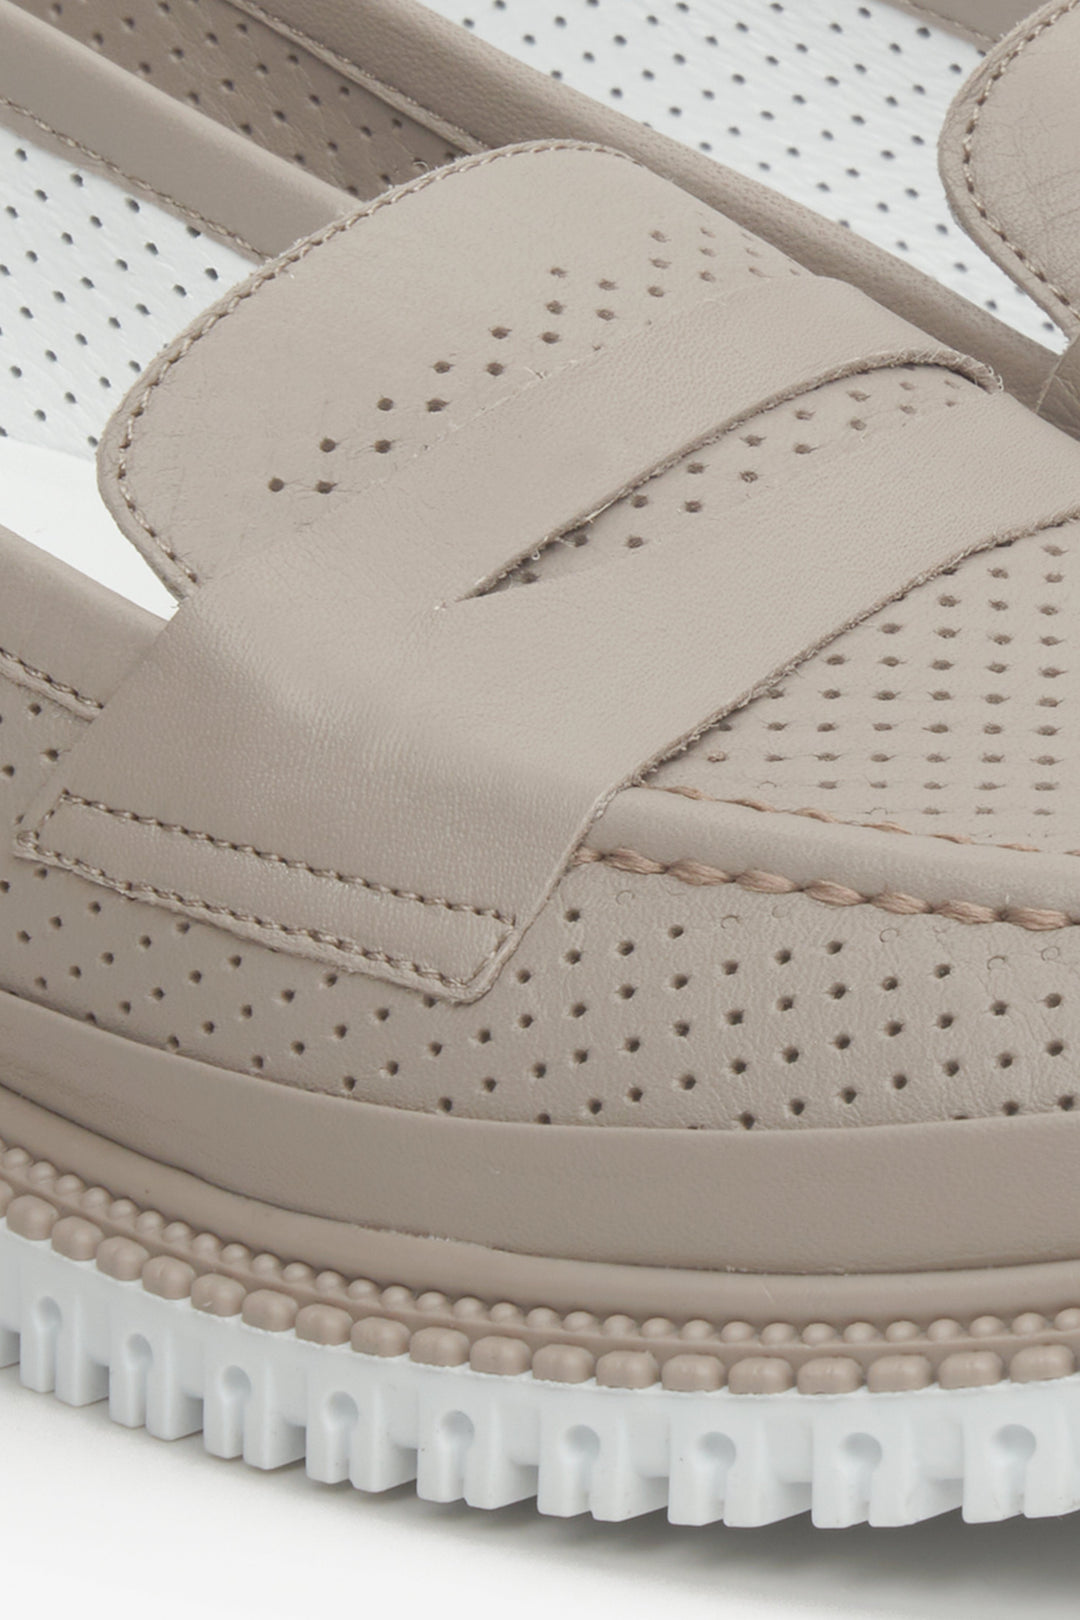 Estro beige women's loafers - close up on details.